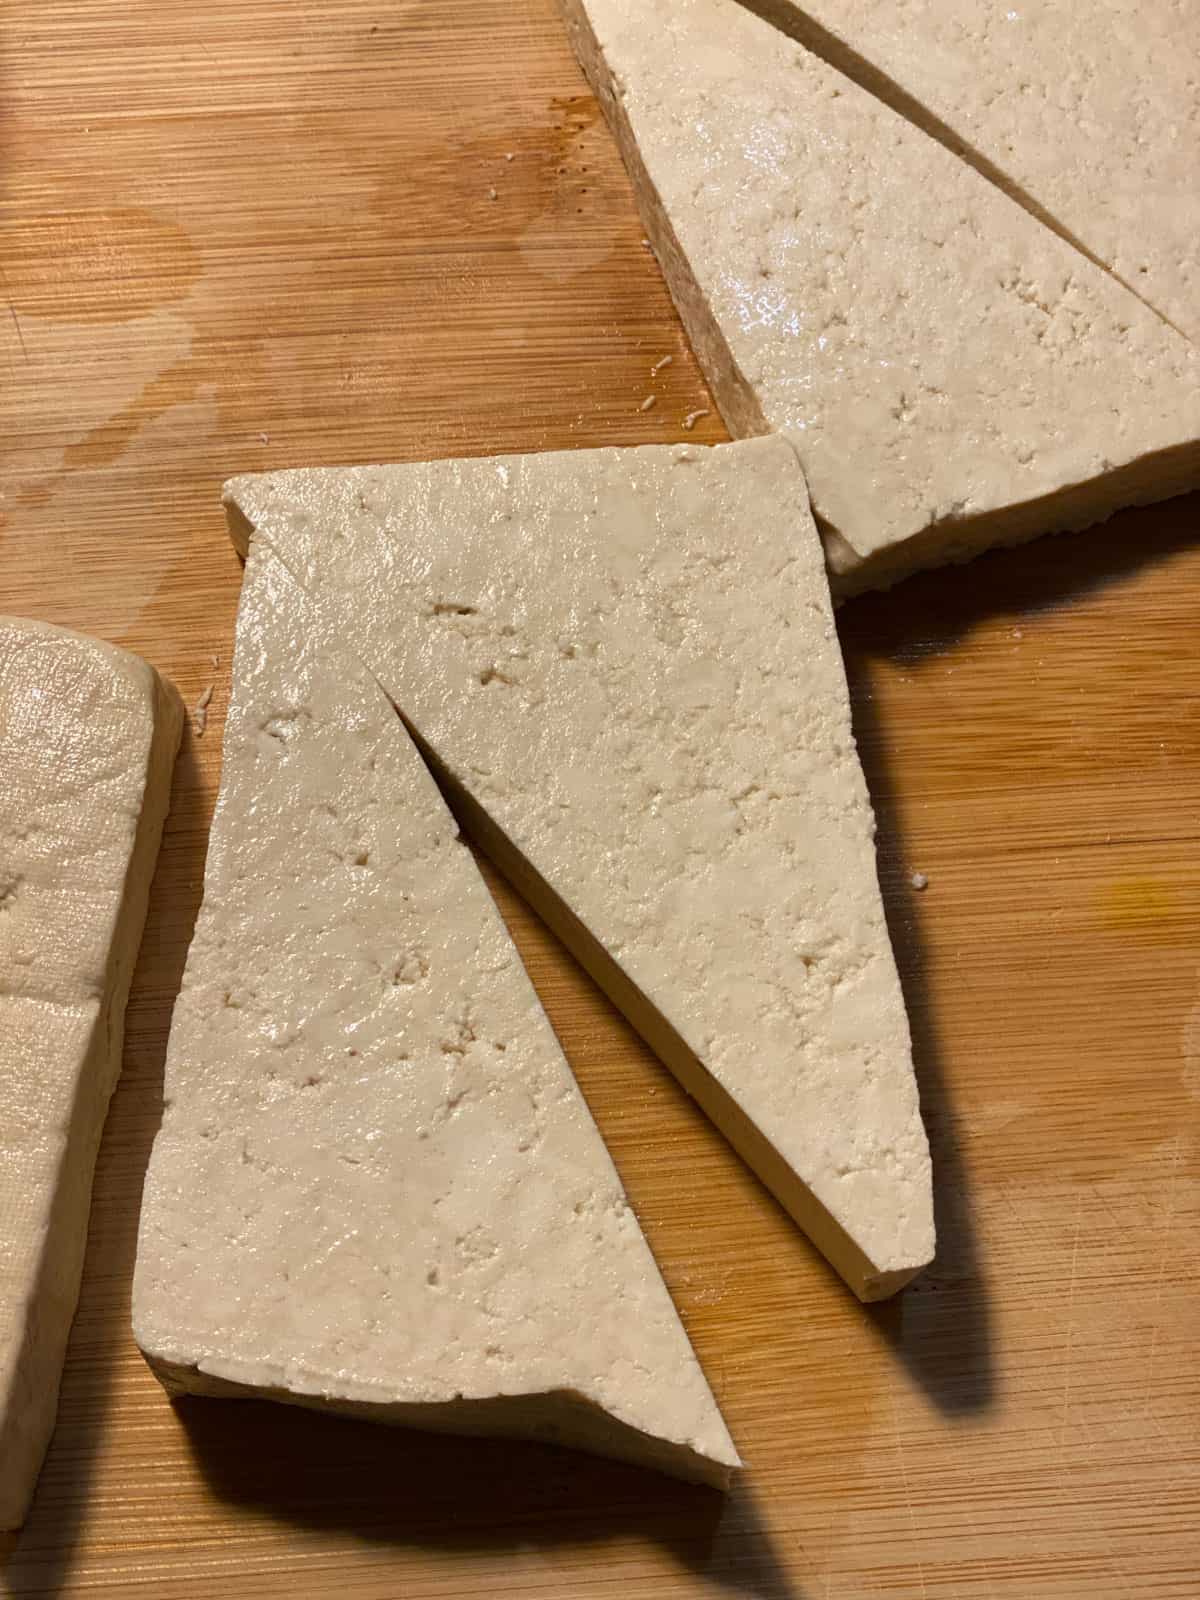 process of showing triangular cut of tofu on cutting block